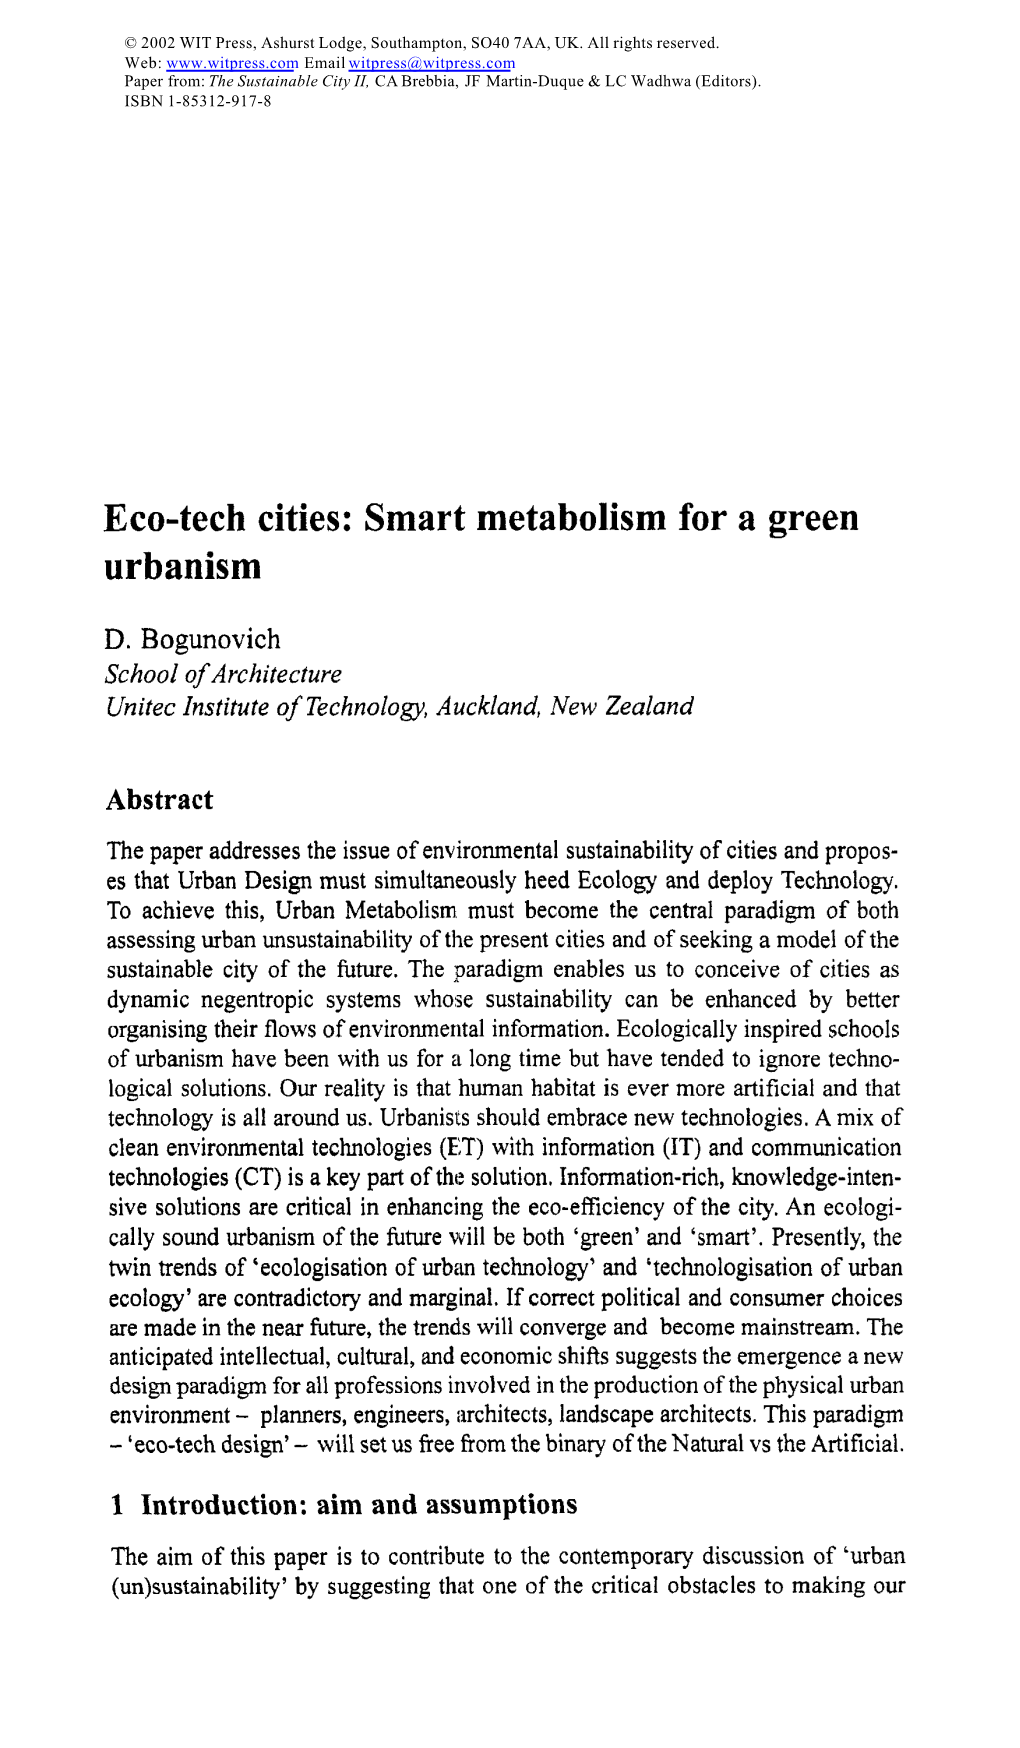 Eco-Tech Cities: Smart Metabolism for a Green Urbanism